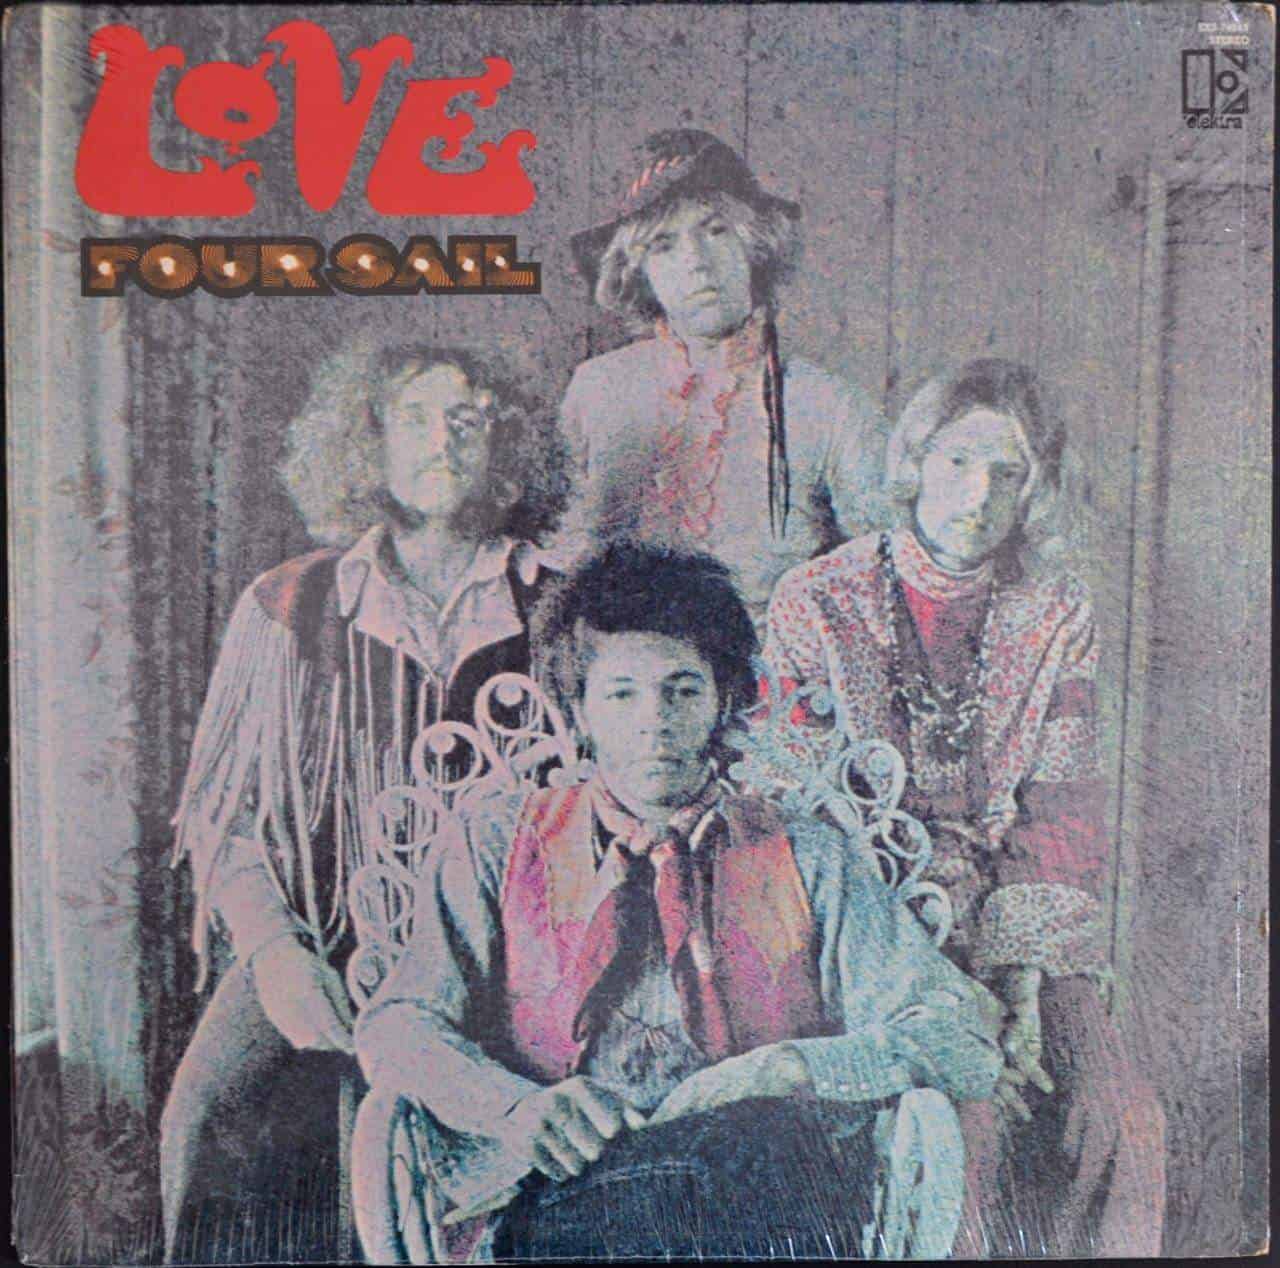 LOVE - FOUR SAIL - VINYL LP - Wah Wah Records